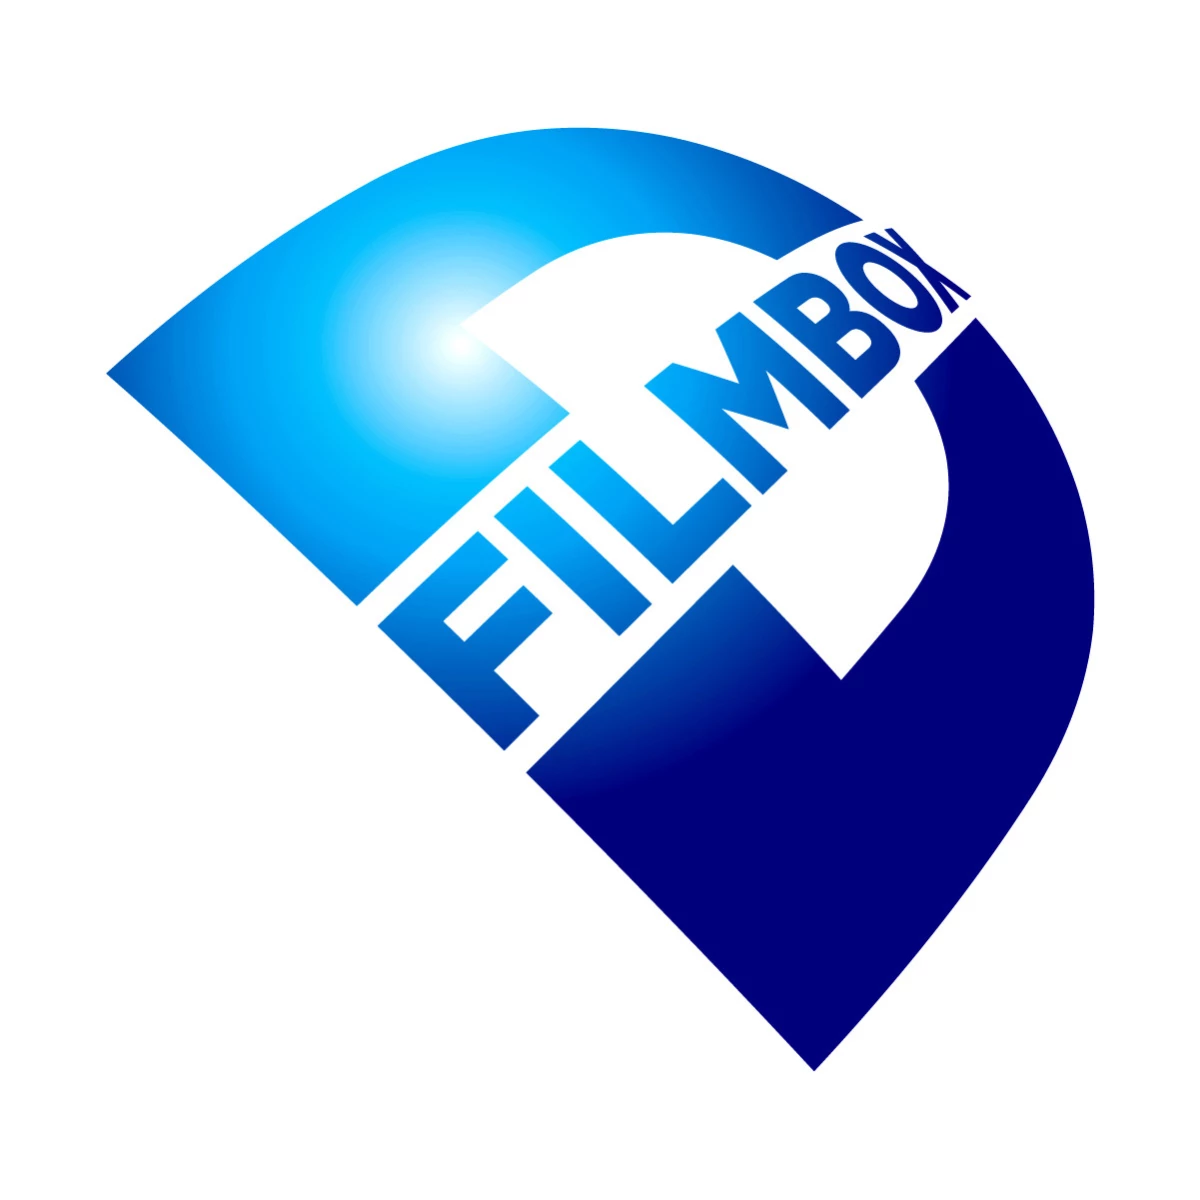 D-Smart’tan Yeni Film Kanalı "Filmbox"